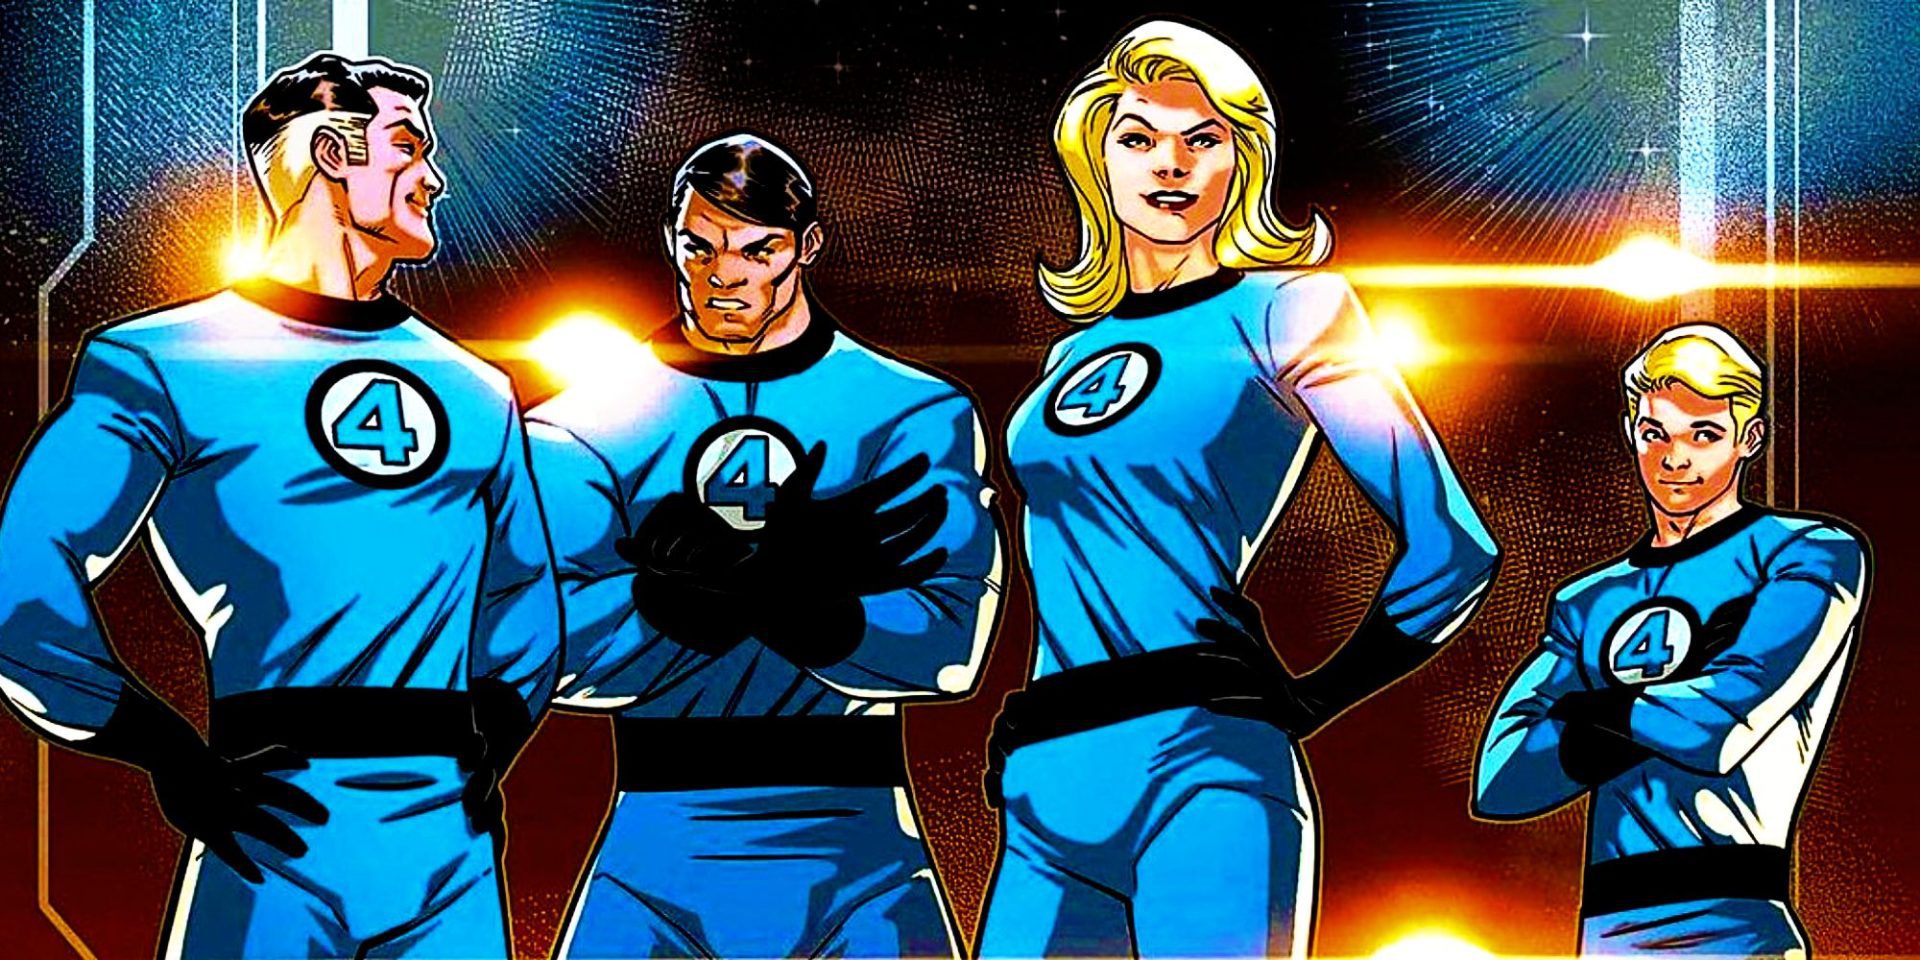 MCU Fantastic Four Cast Gets Modern ‘MCU-ified’ Costumes in Marvel Art